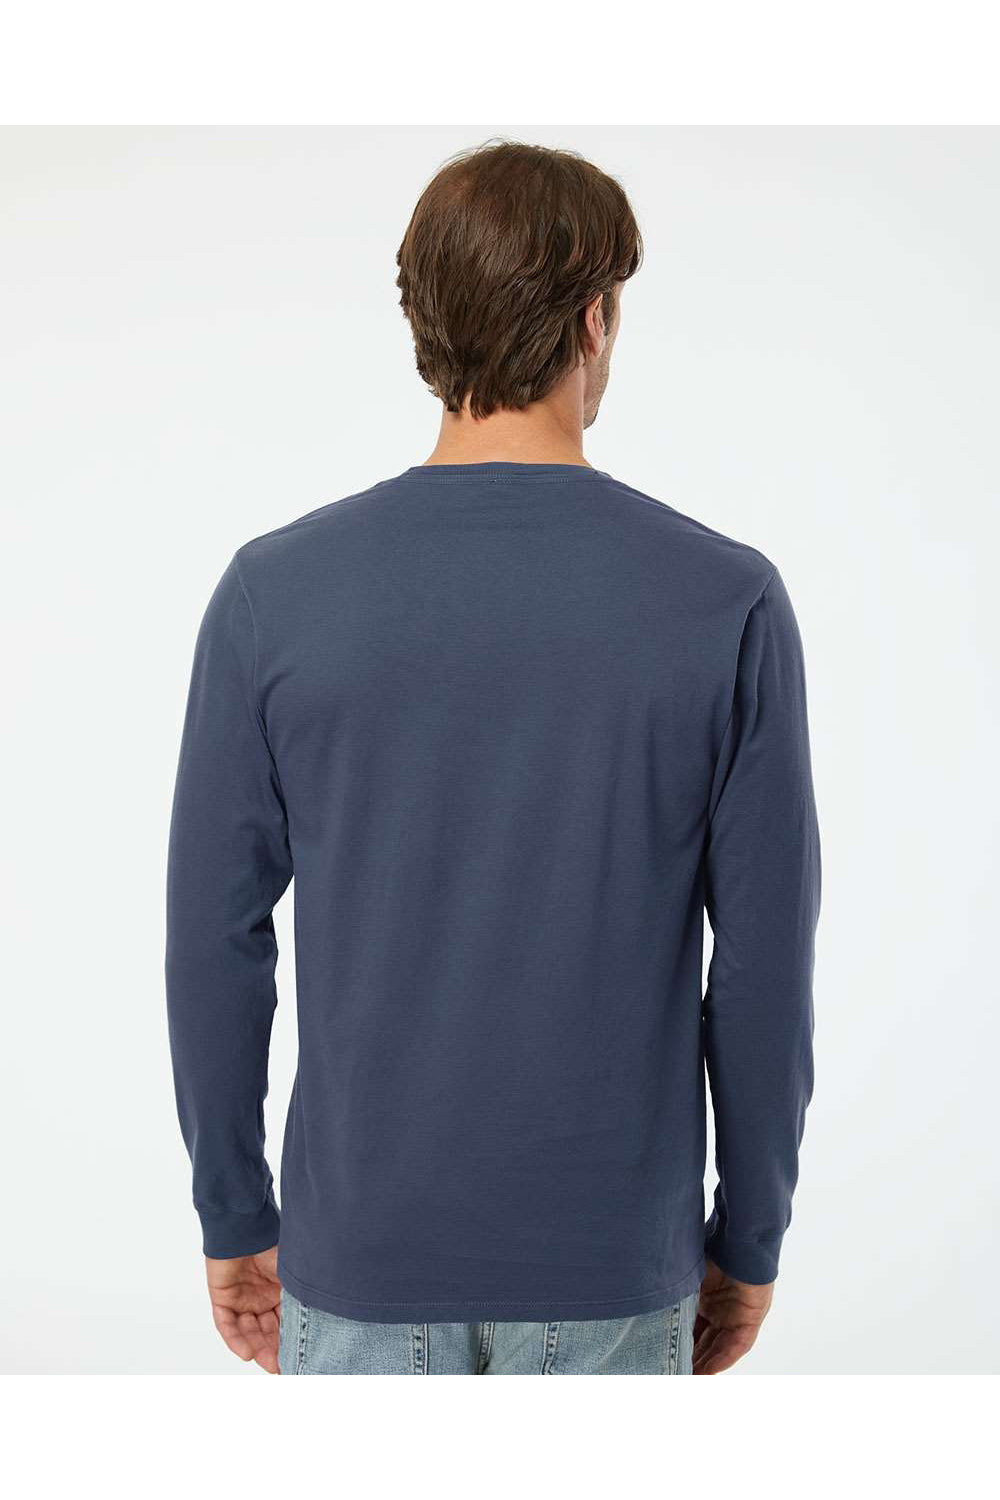 SoftShirts 420 Mens Organic Long Sleeve Crewneck T-Shirt Navy Blue Model Back